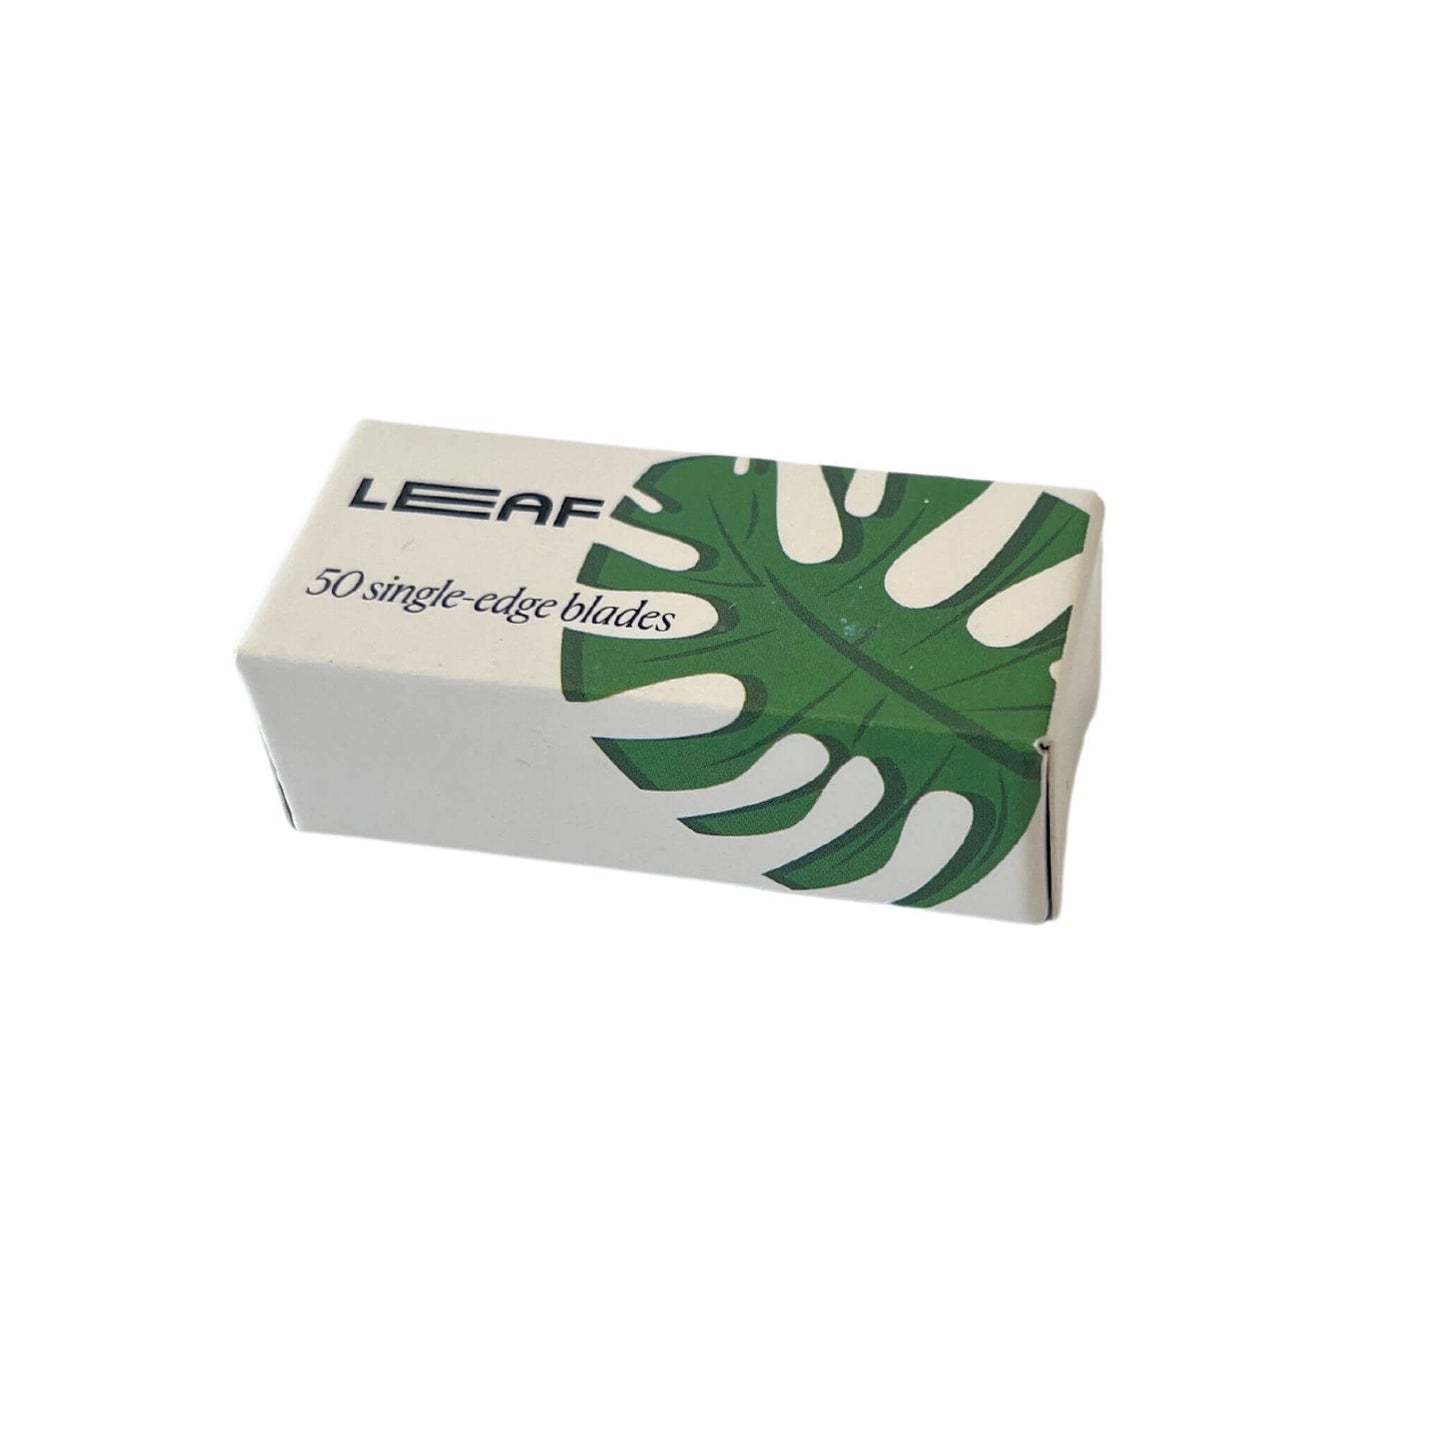 leaf razor single edge blades in a pack of 50 - box has leaf design